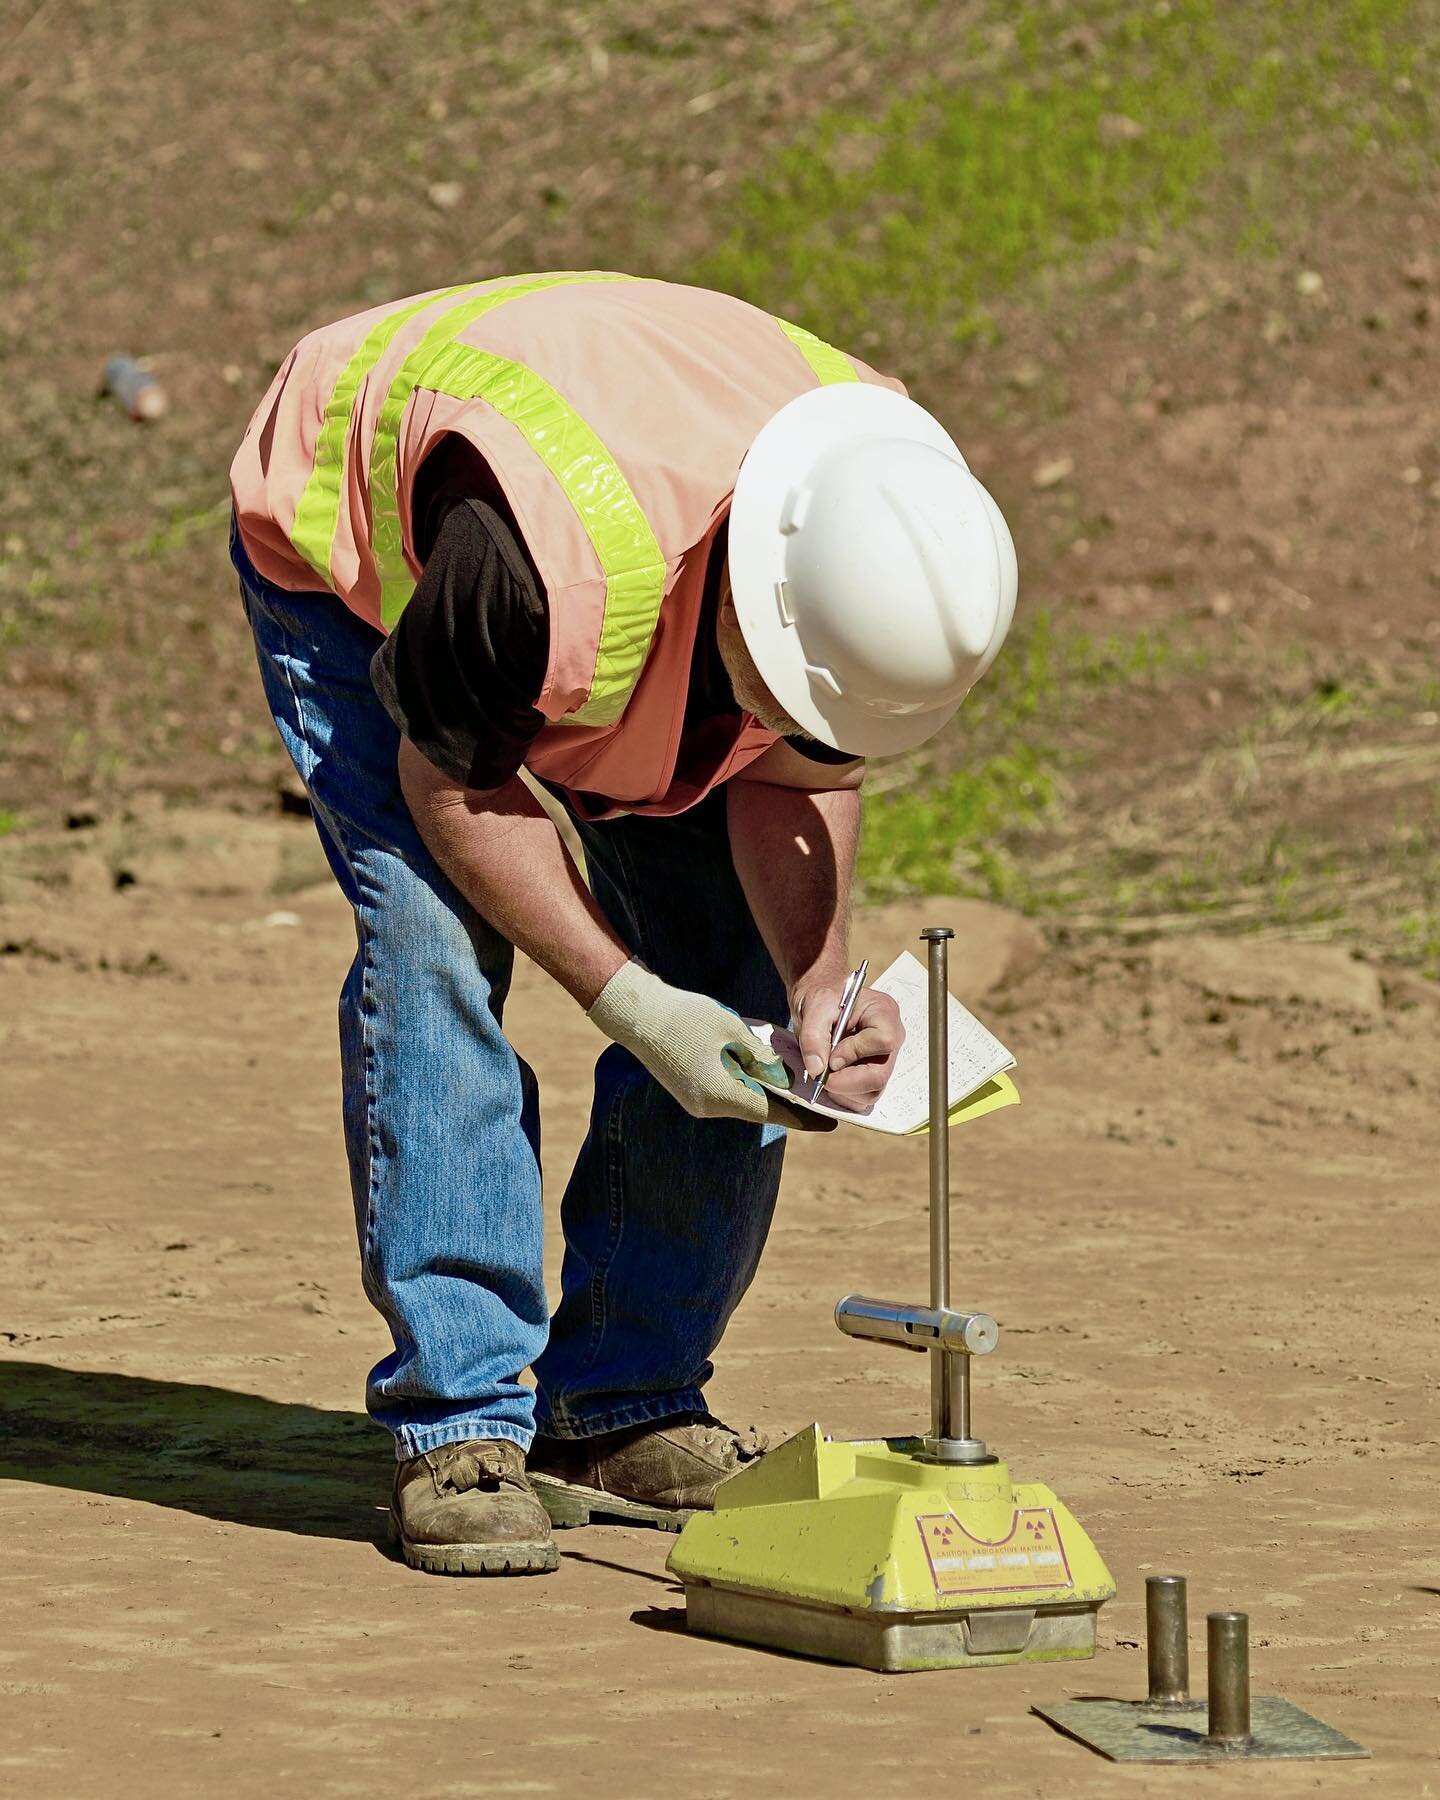 ✔️Coffey使用一种创新的核密度计，测量土壤密度比传统的砂锥法快20倍。核密度计测量穿过土壤的放射性源光子。然后，通过一个复杂的等式